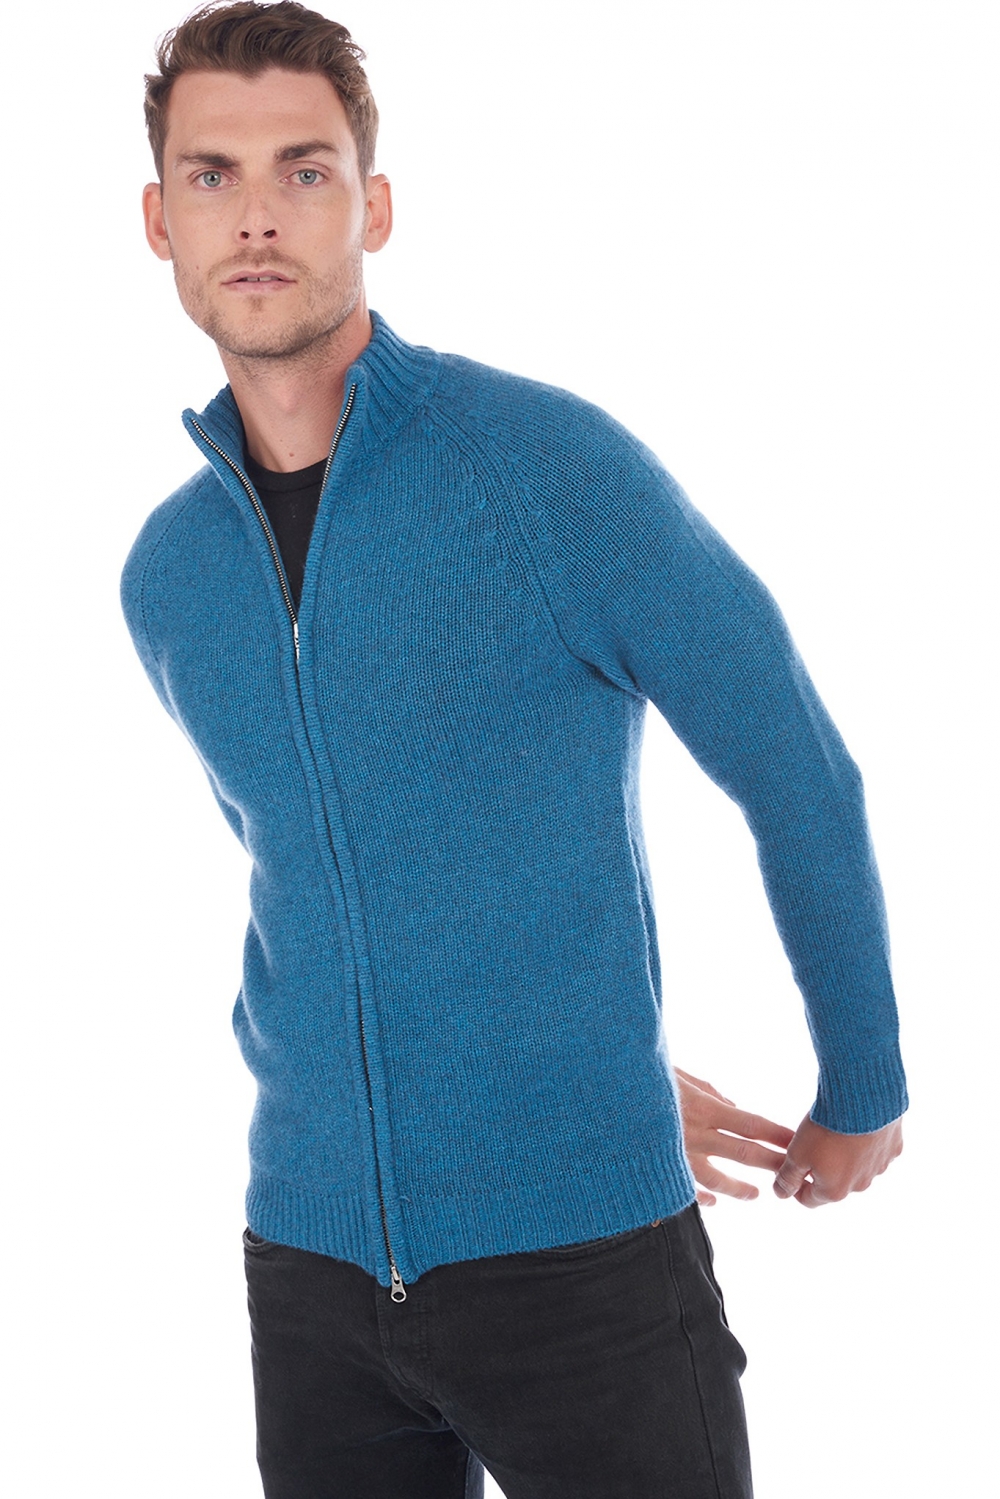 Cashmere men waistcoat sleeveless sweaters argos manor blue m